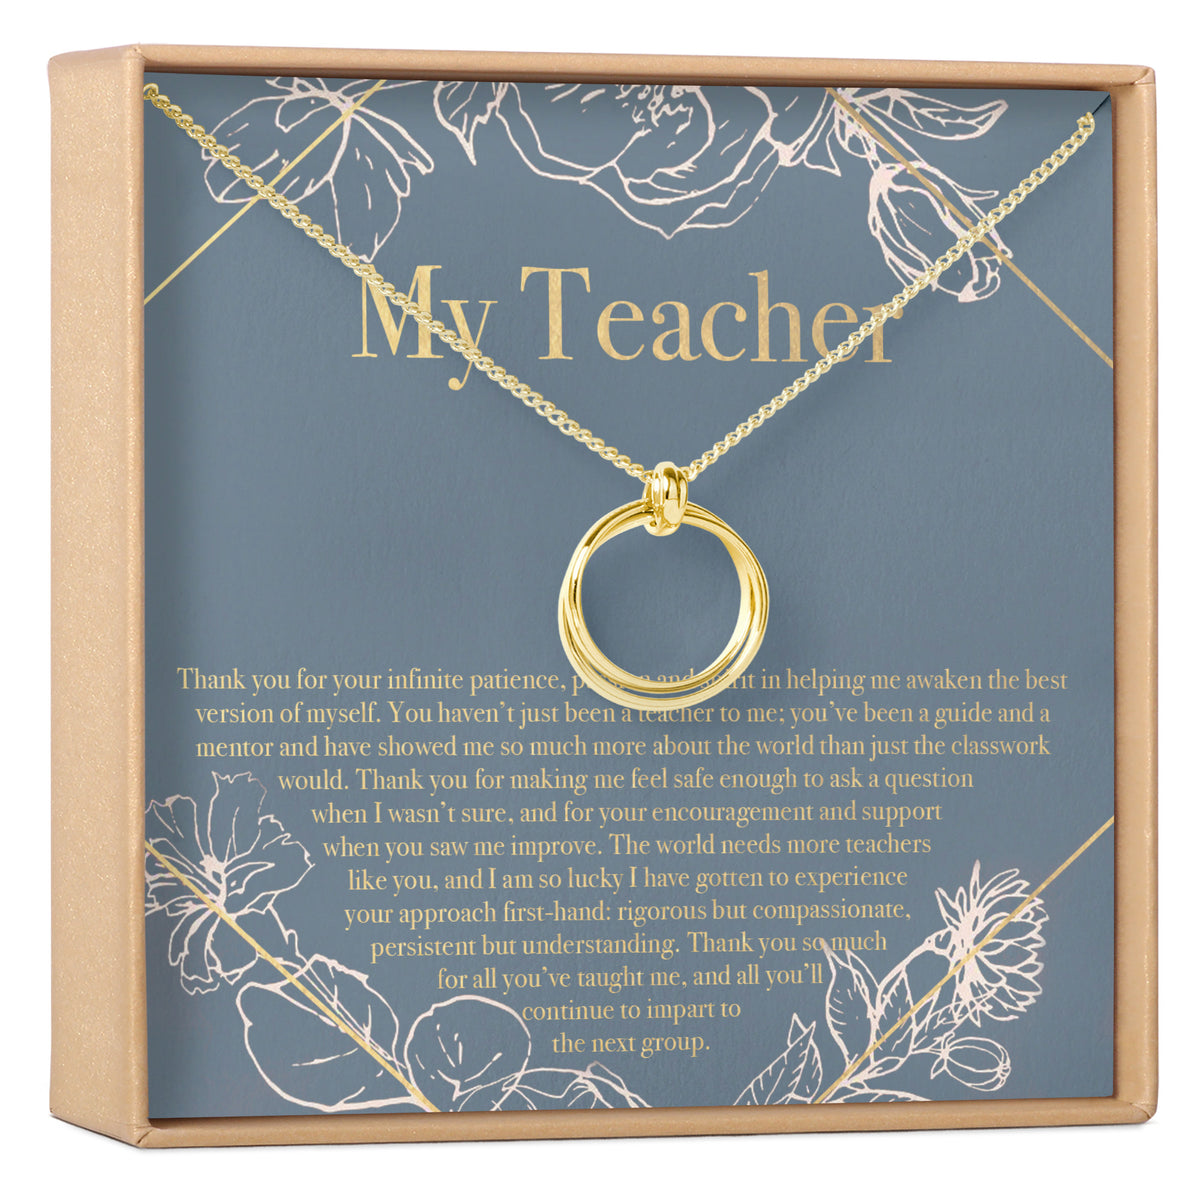 Teacher Necklace, Multiple Styles